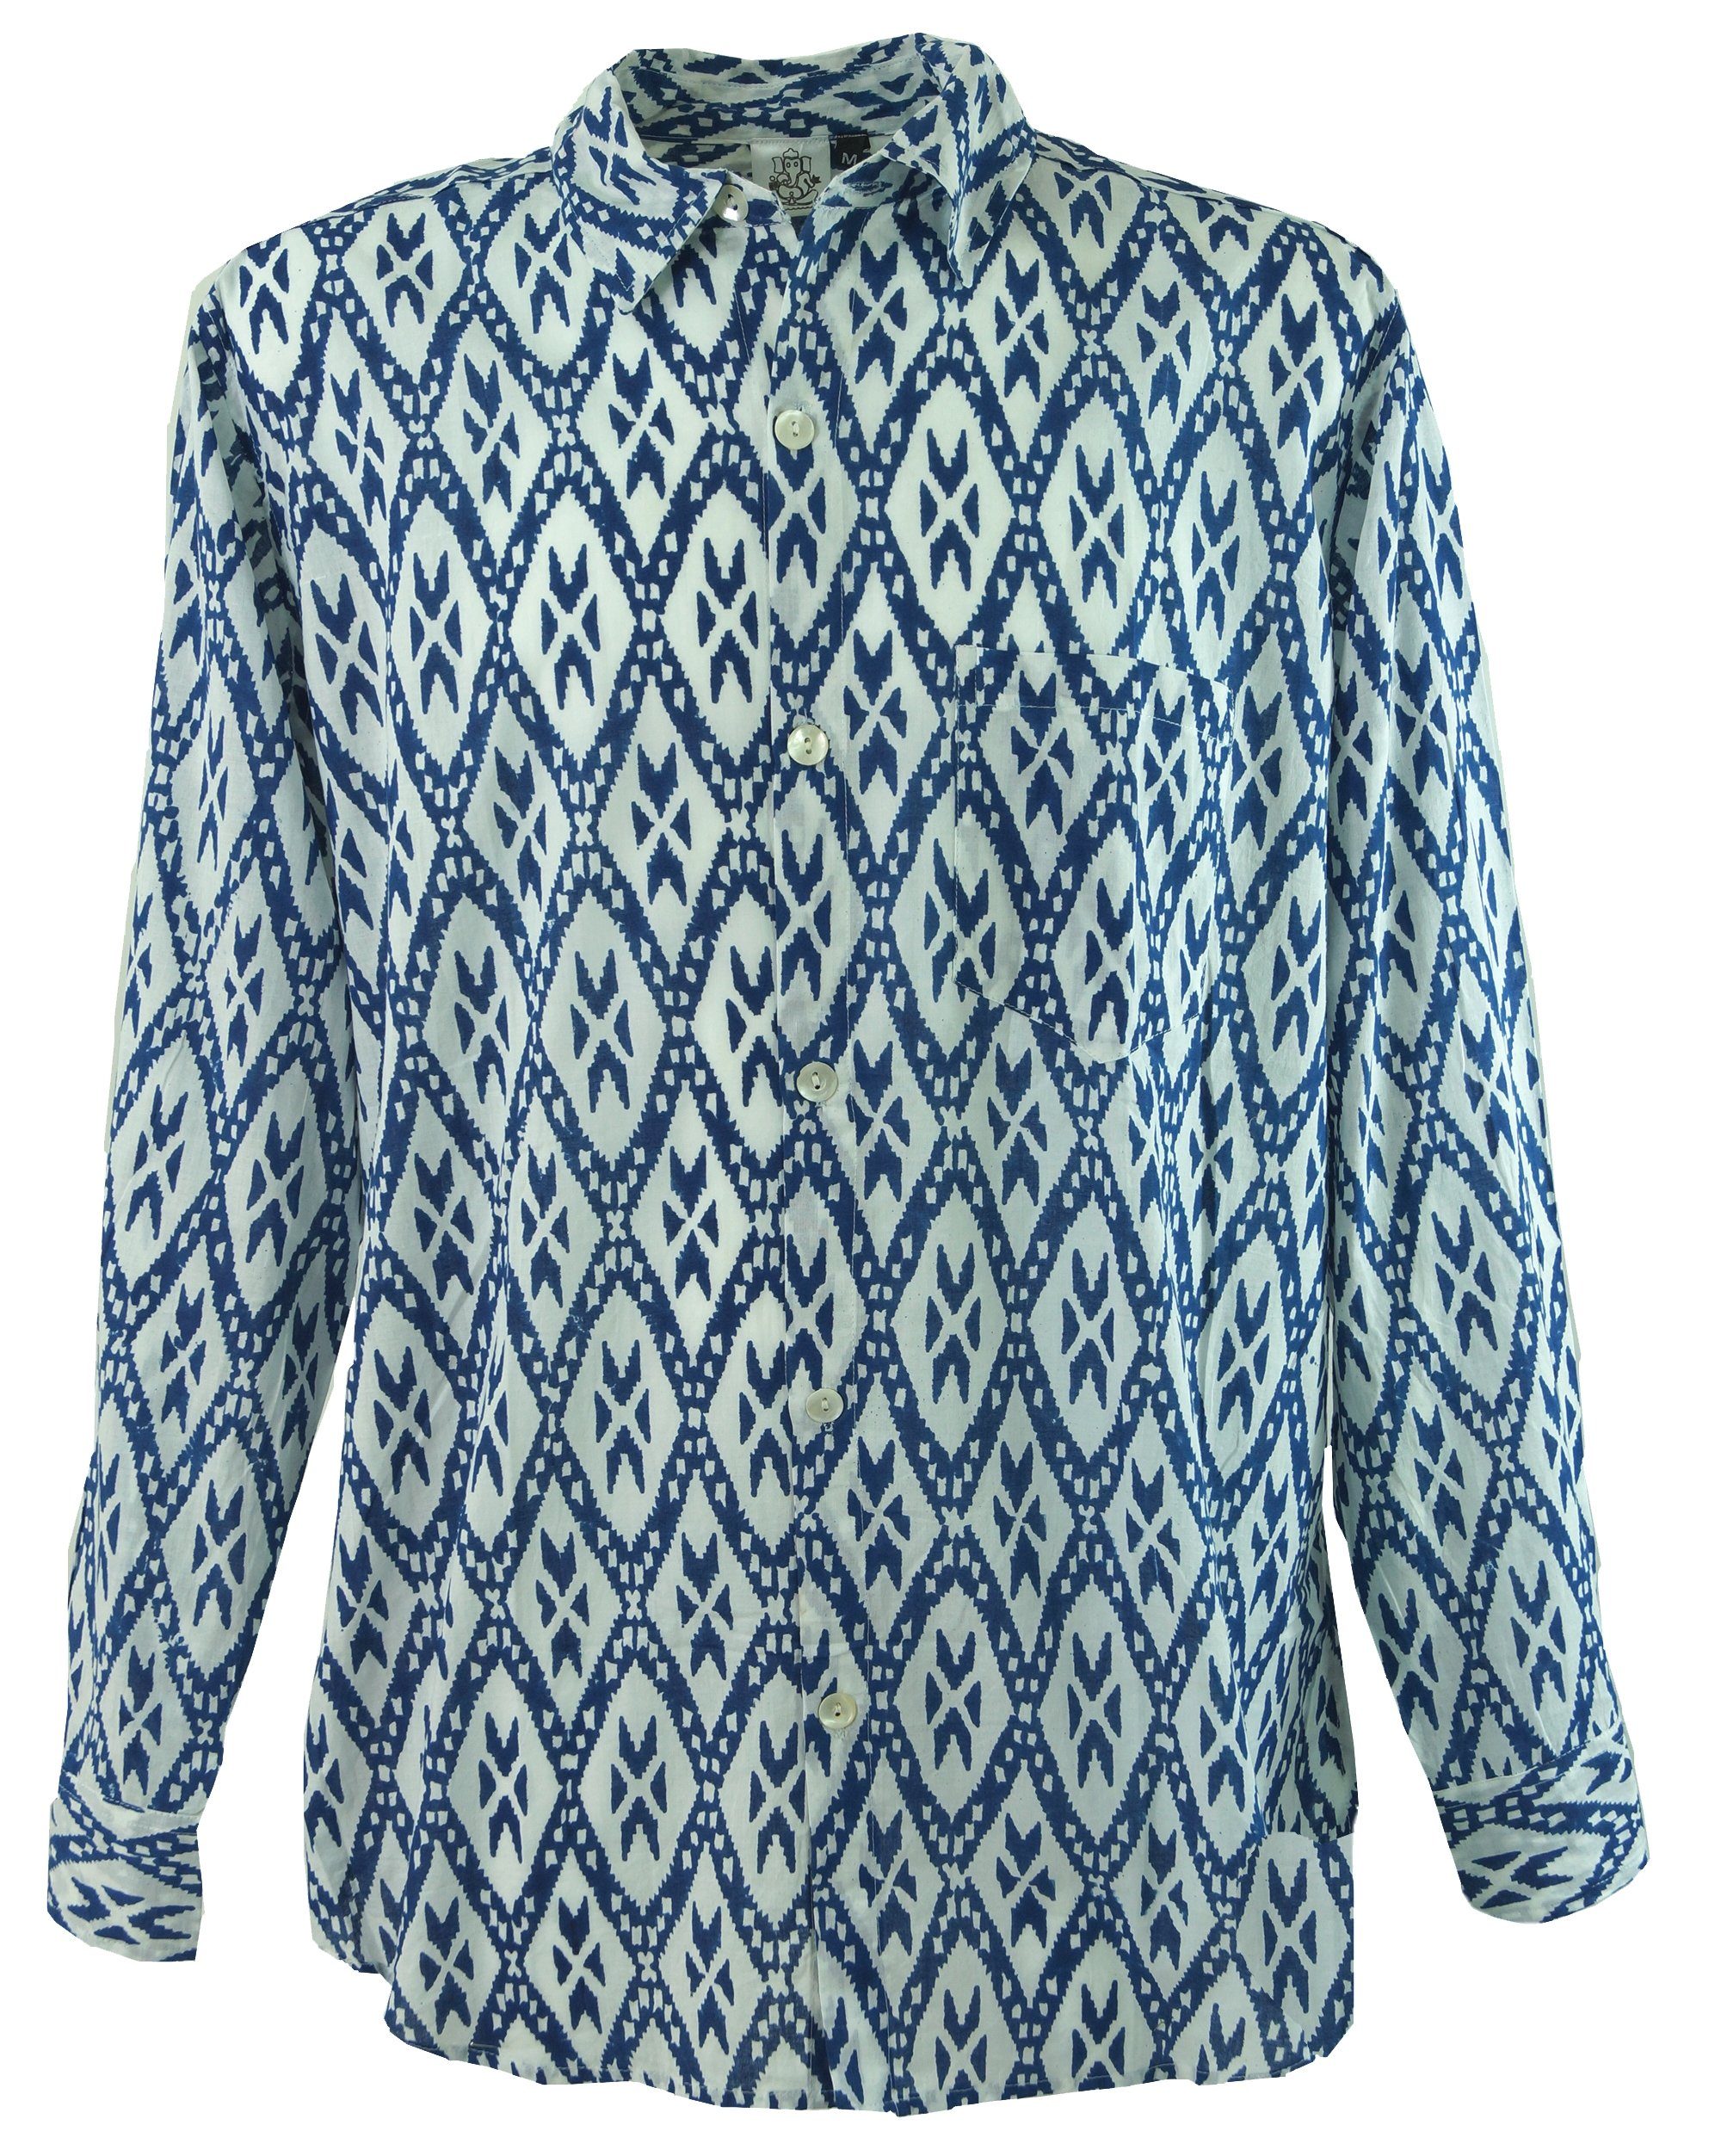 Guru-Shop Hemd & Shirt Goa Hippie Hemd, Herrenhemd - blau Retro, Ethno Style, alternative Bekleidung